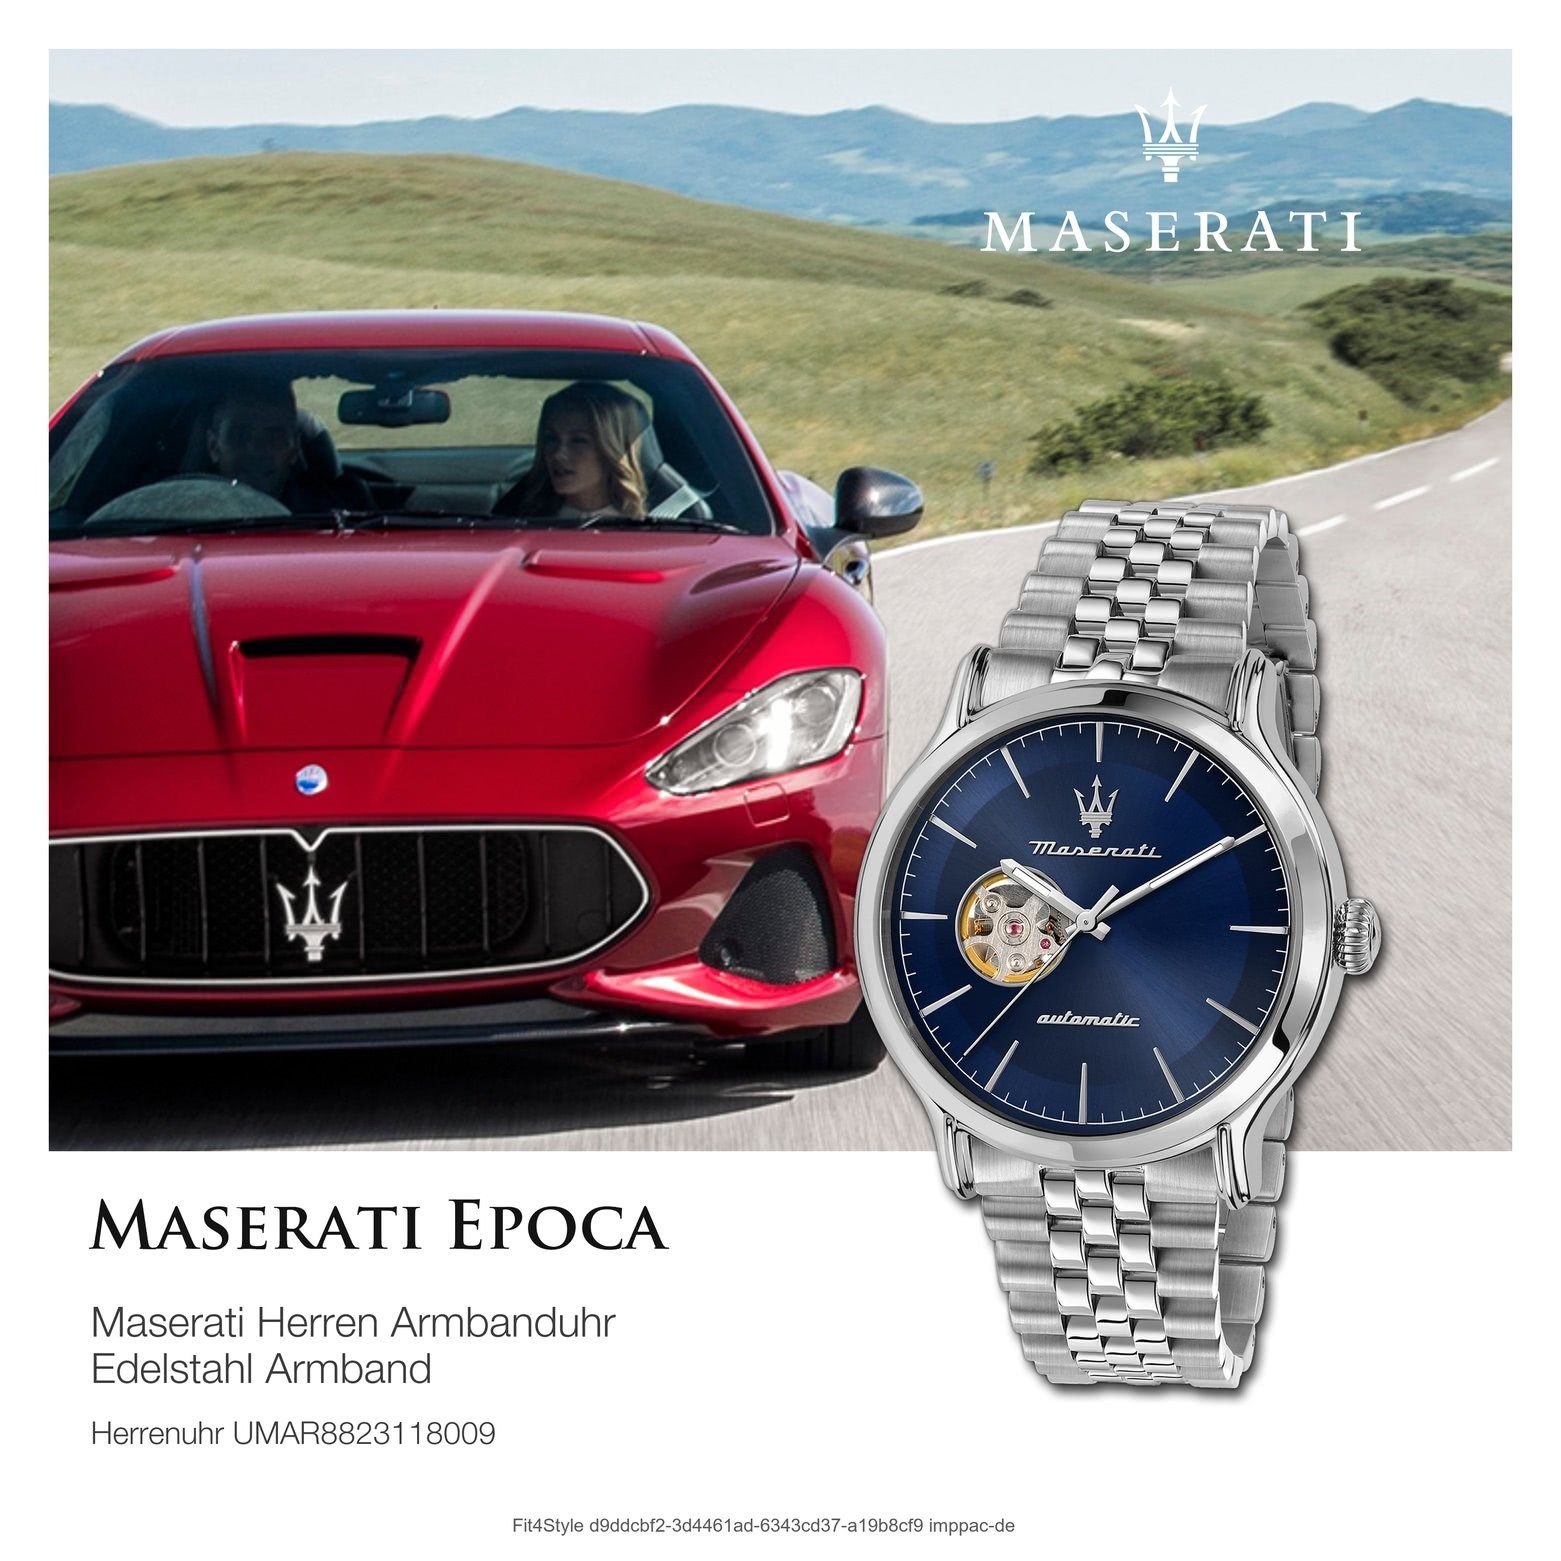 Time Herren Maserati blau Armbanduhr Made-In rund, Herrenuhr groß 42mm) Italy MASERATI (ca. Epoca, Edelstahlarmband, Maserati Quarzuhr